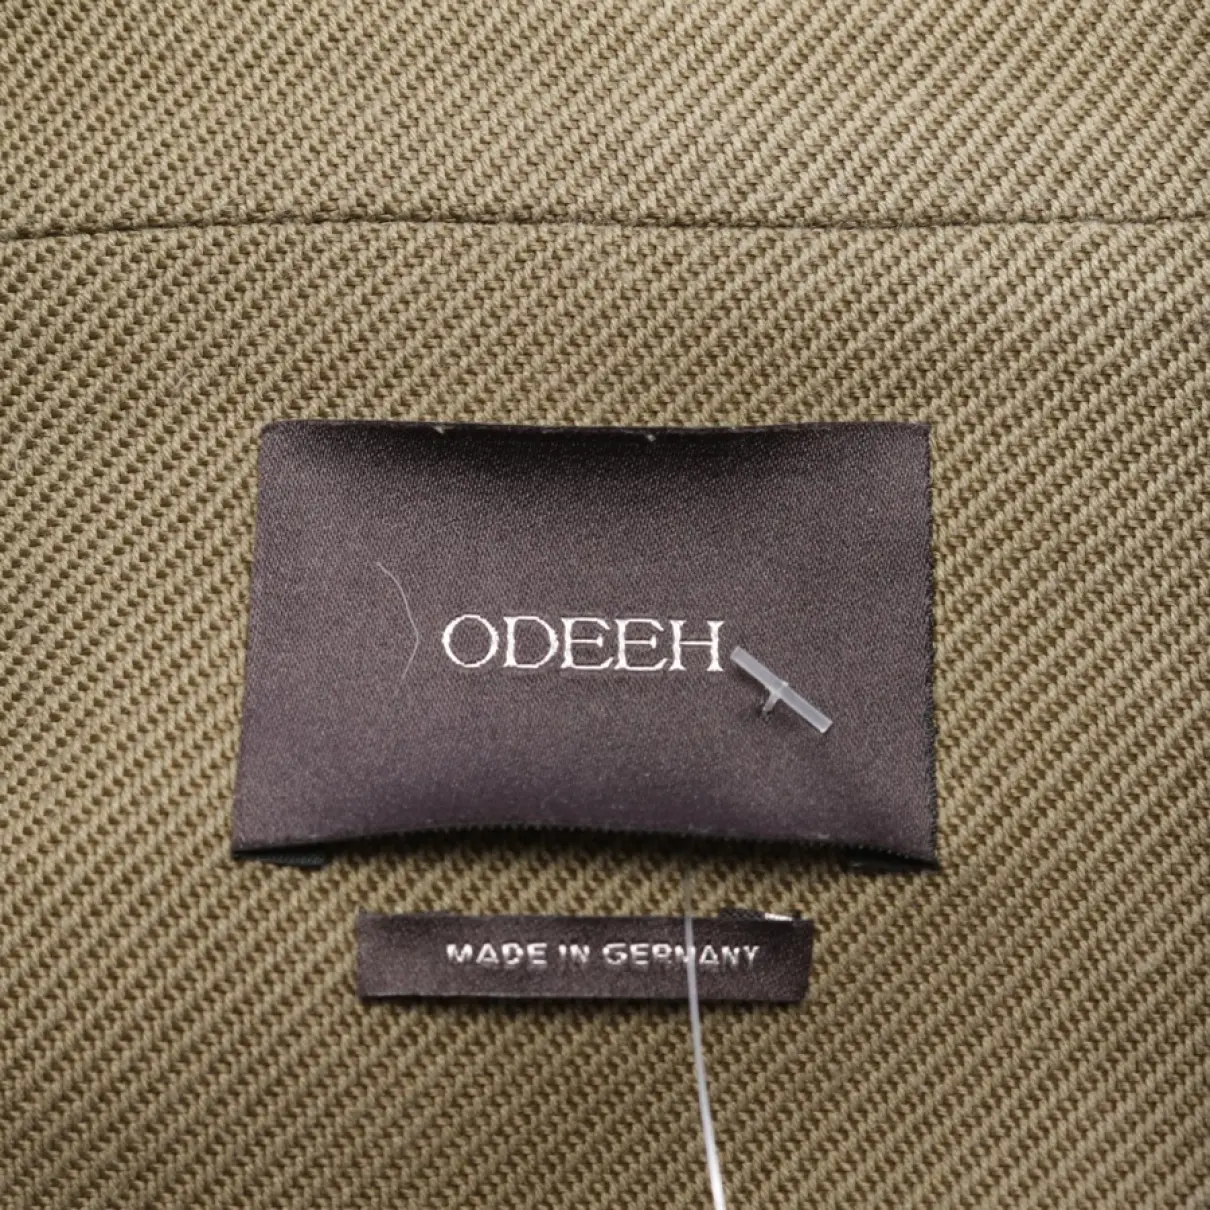 Buy Odeeh Jacket online